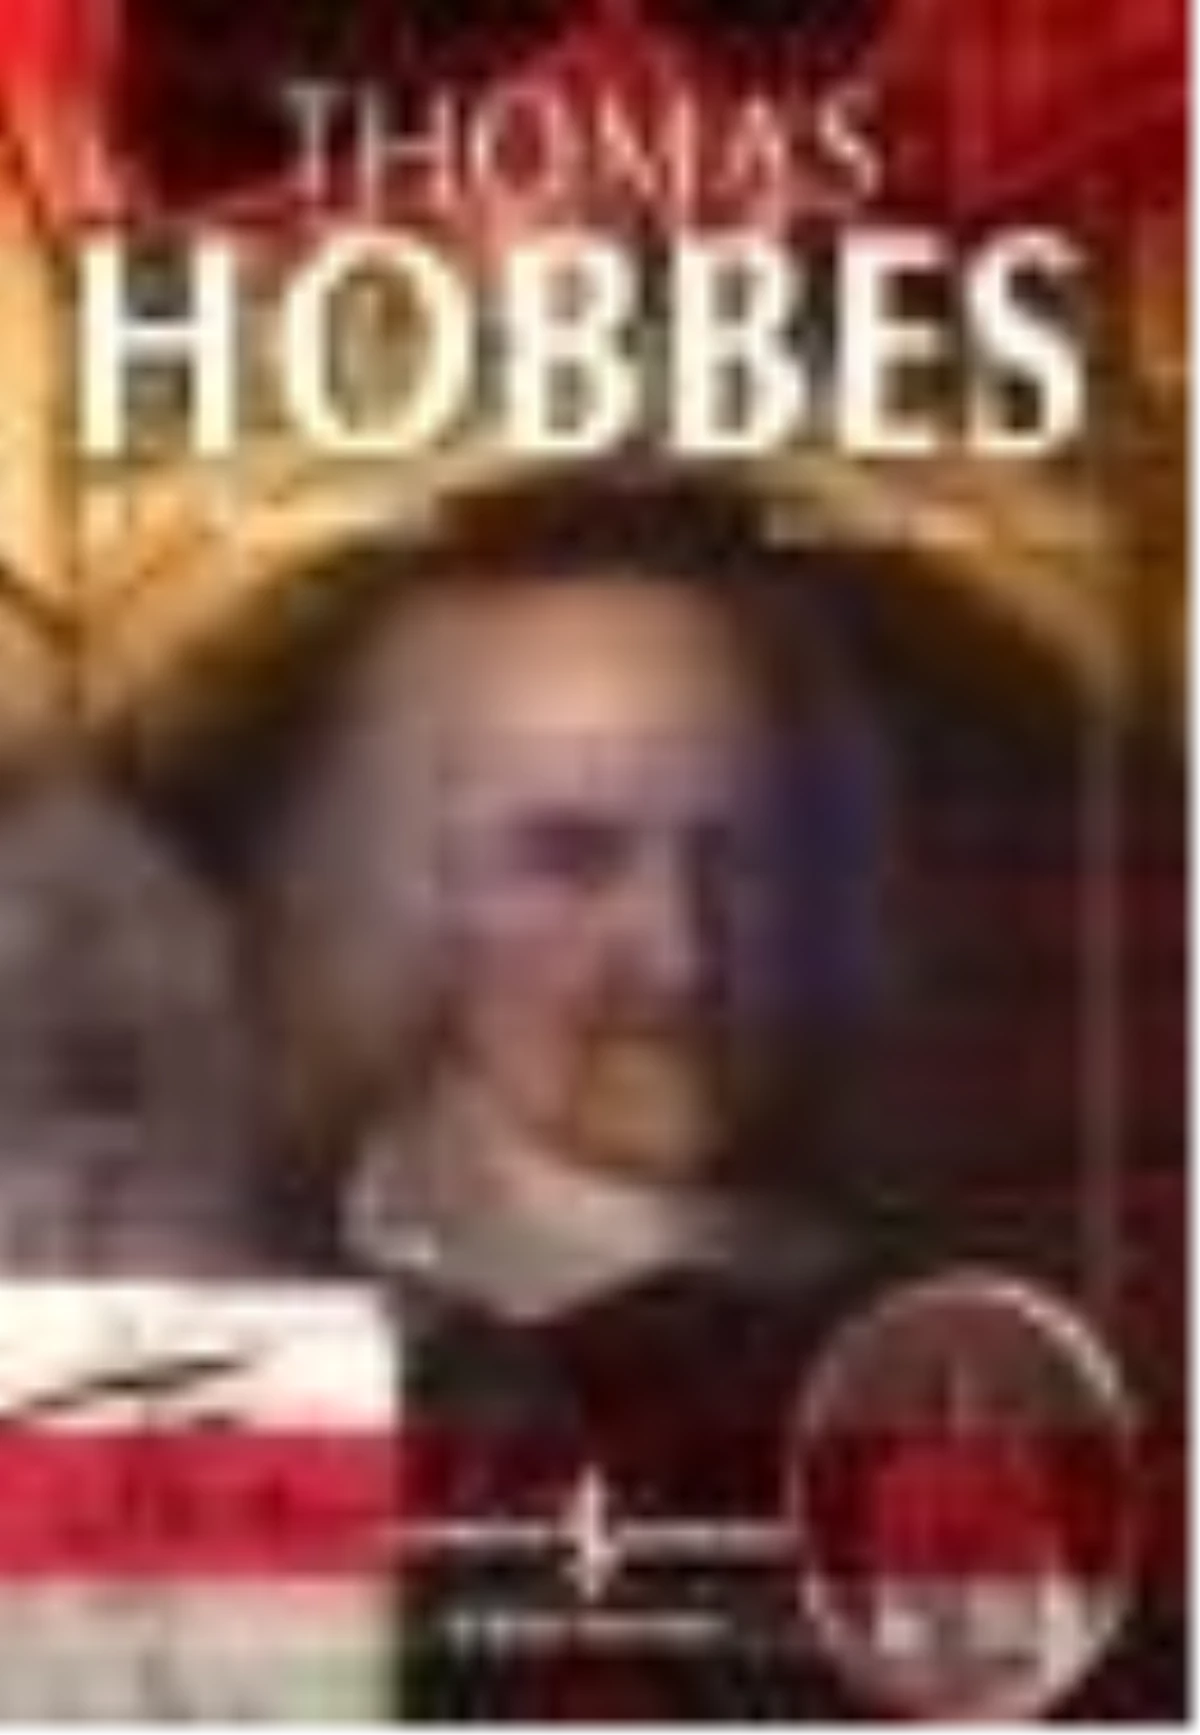 Thomas Hobbens Kitabı